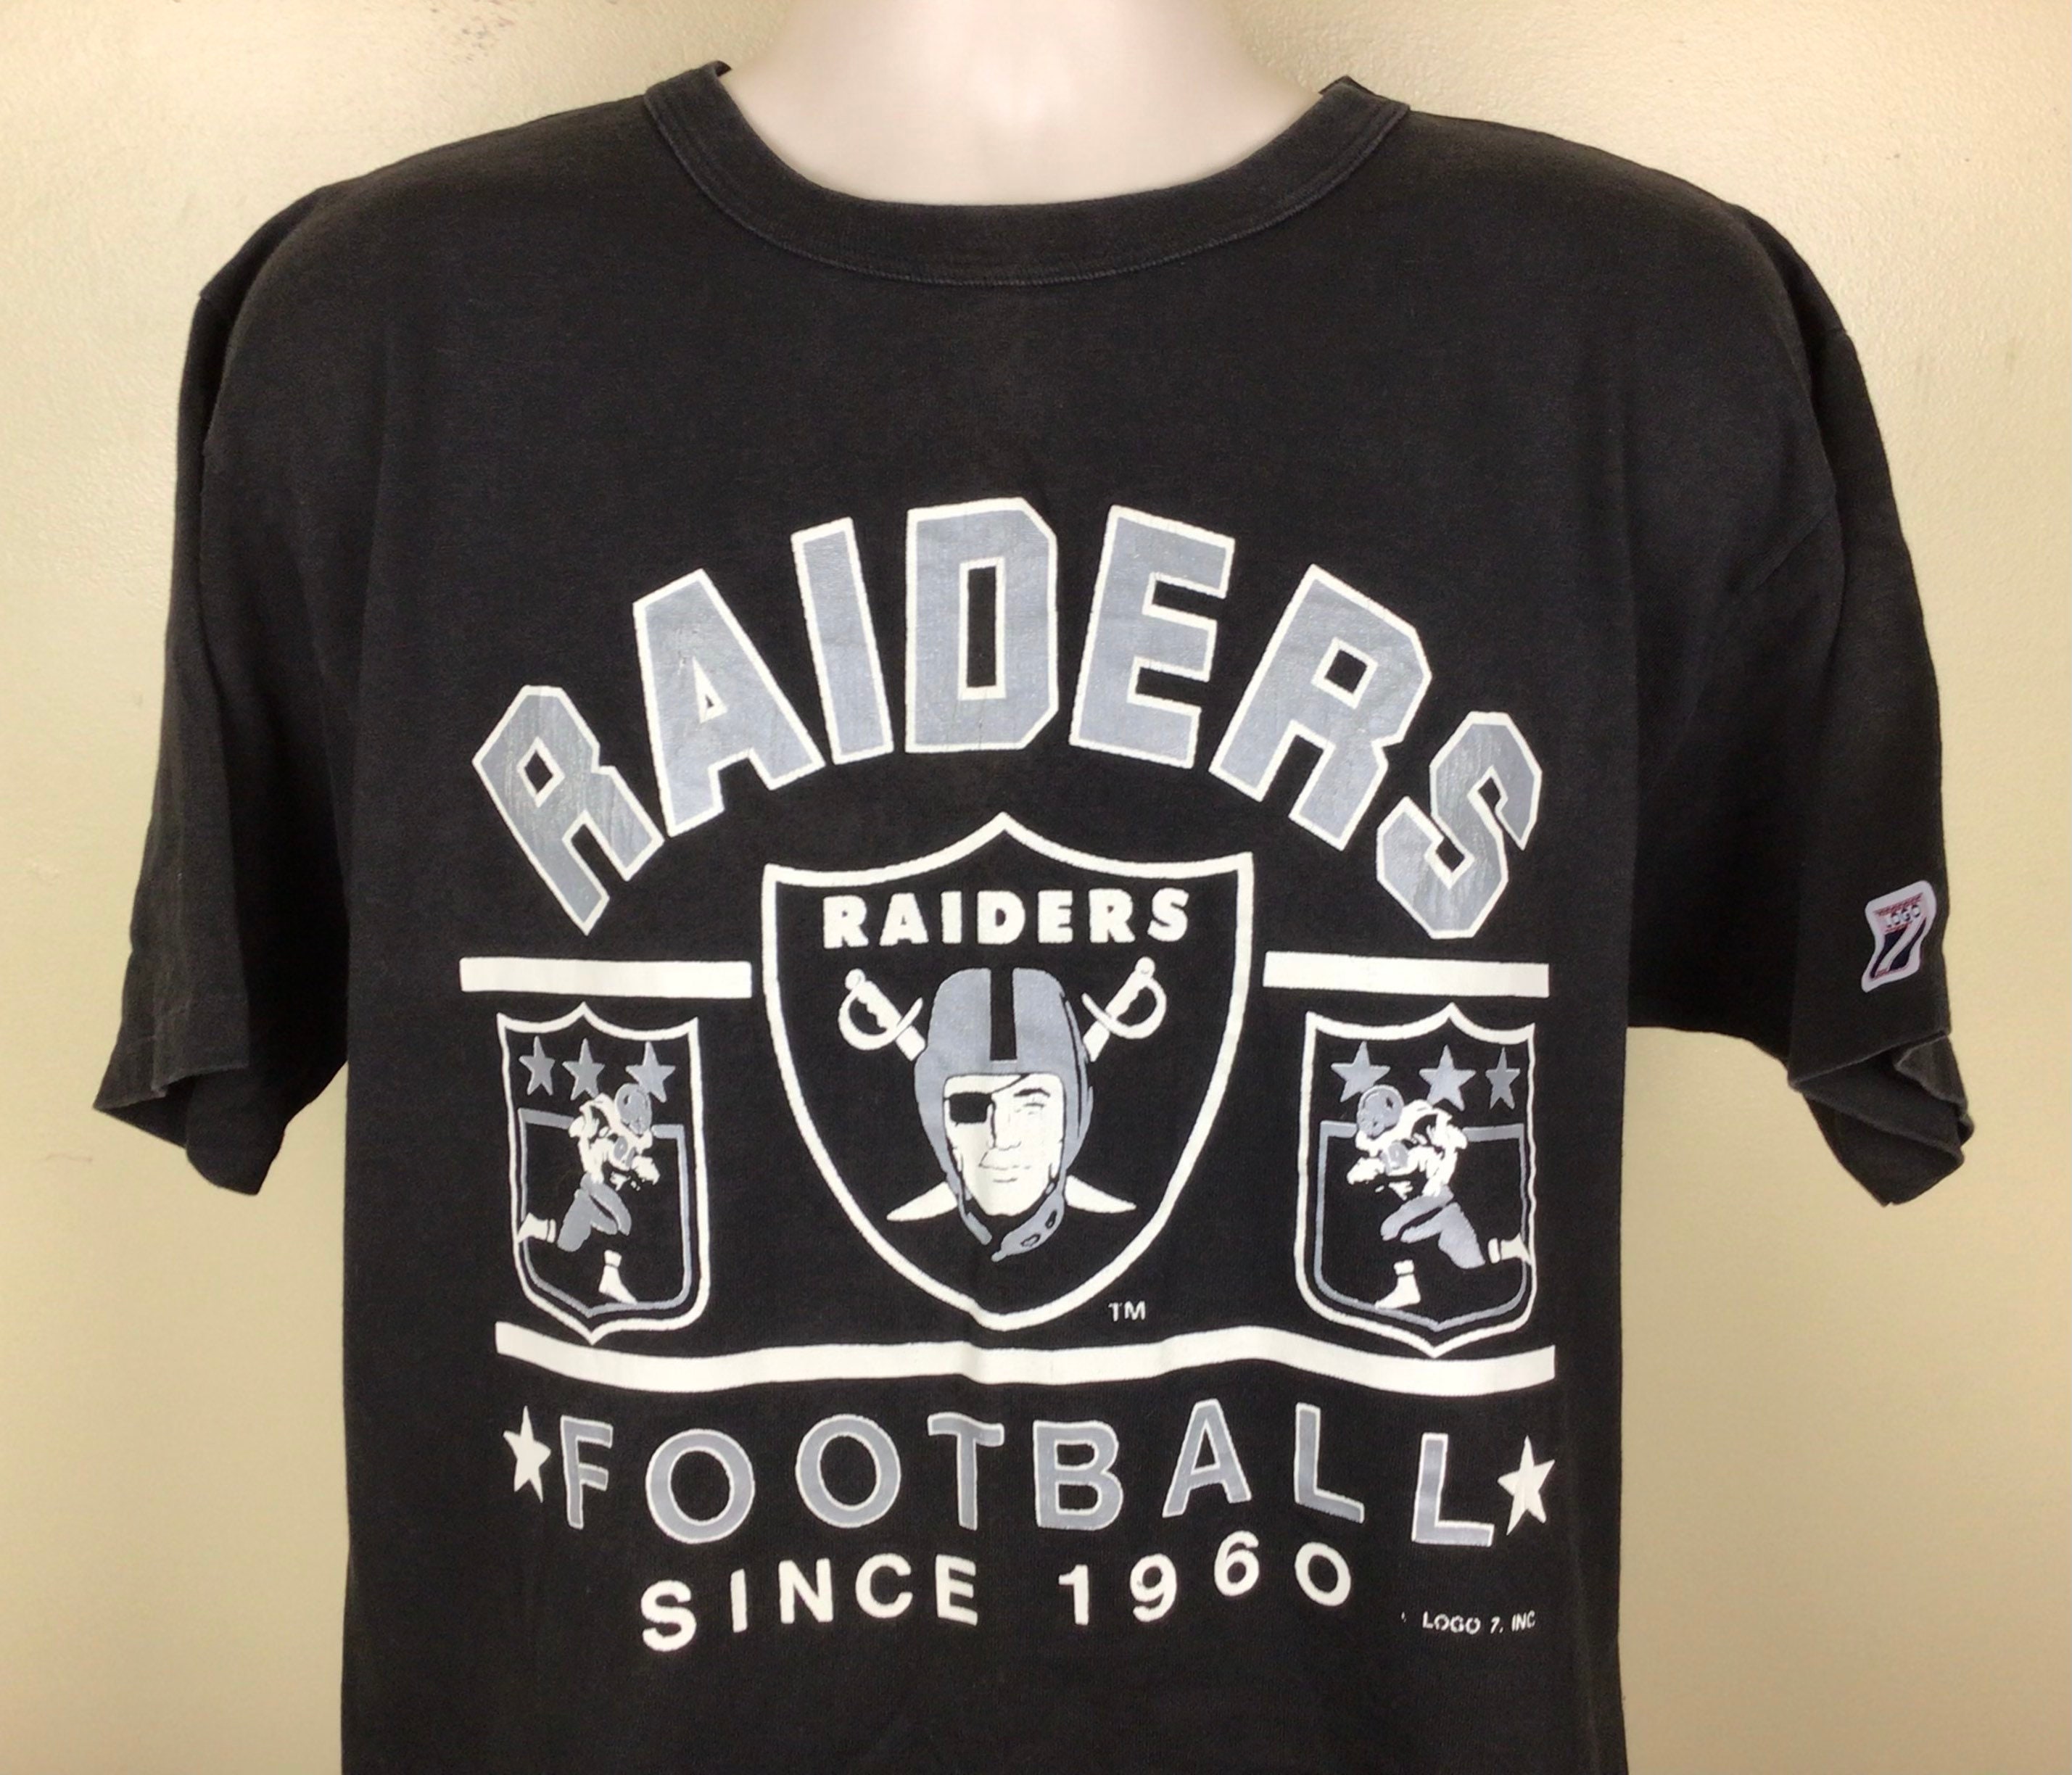 Las Vegas Raiders Majestic NFL Ivy Arch Vintage T-Shirt - Grey Marle